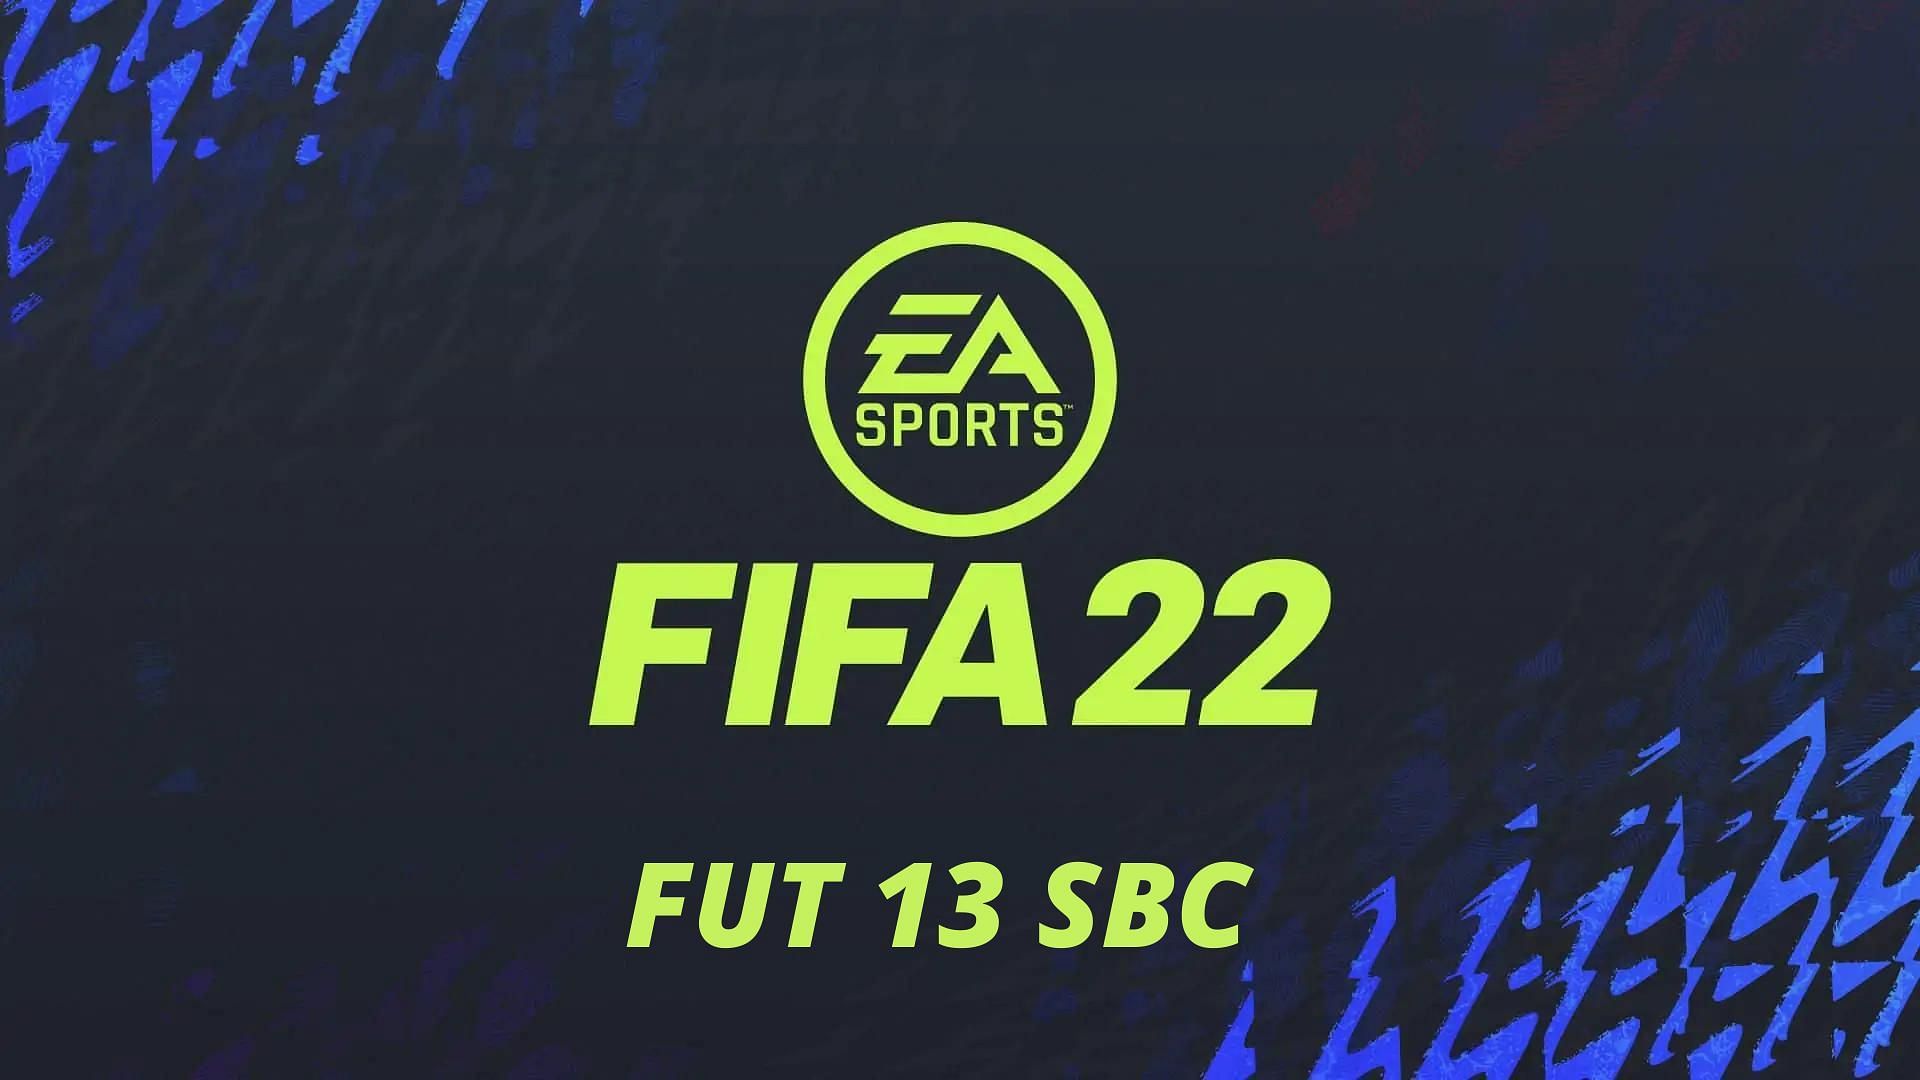 FUT 13 SBC is now live in FIFA 22 (Image via Sportskeeda)